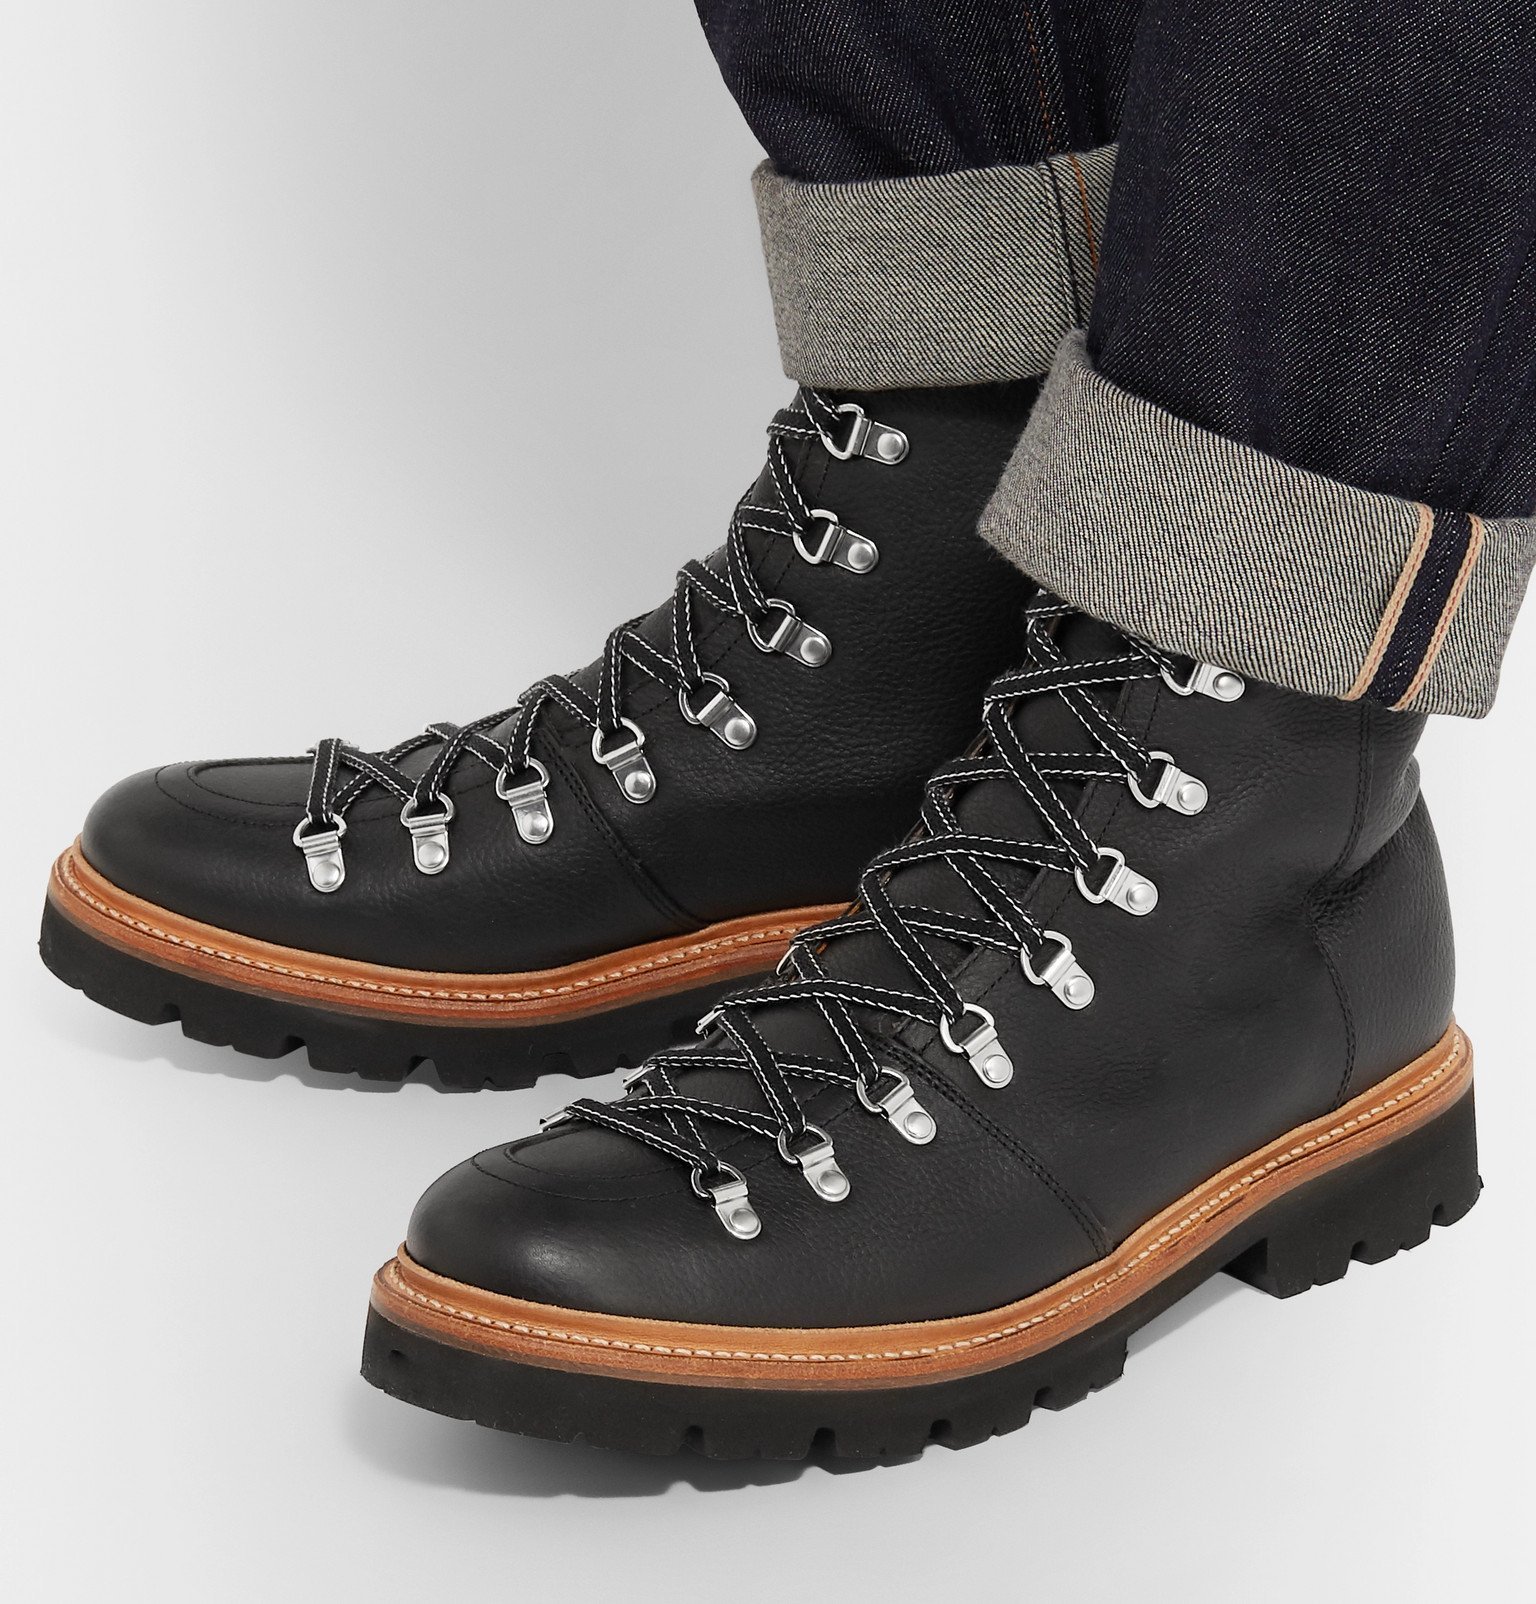 Grenson - Brady Full-Grain Leather Boots - Black Grenson